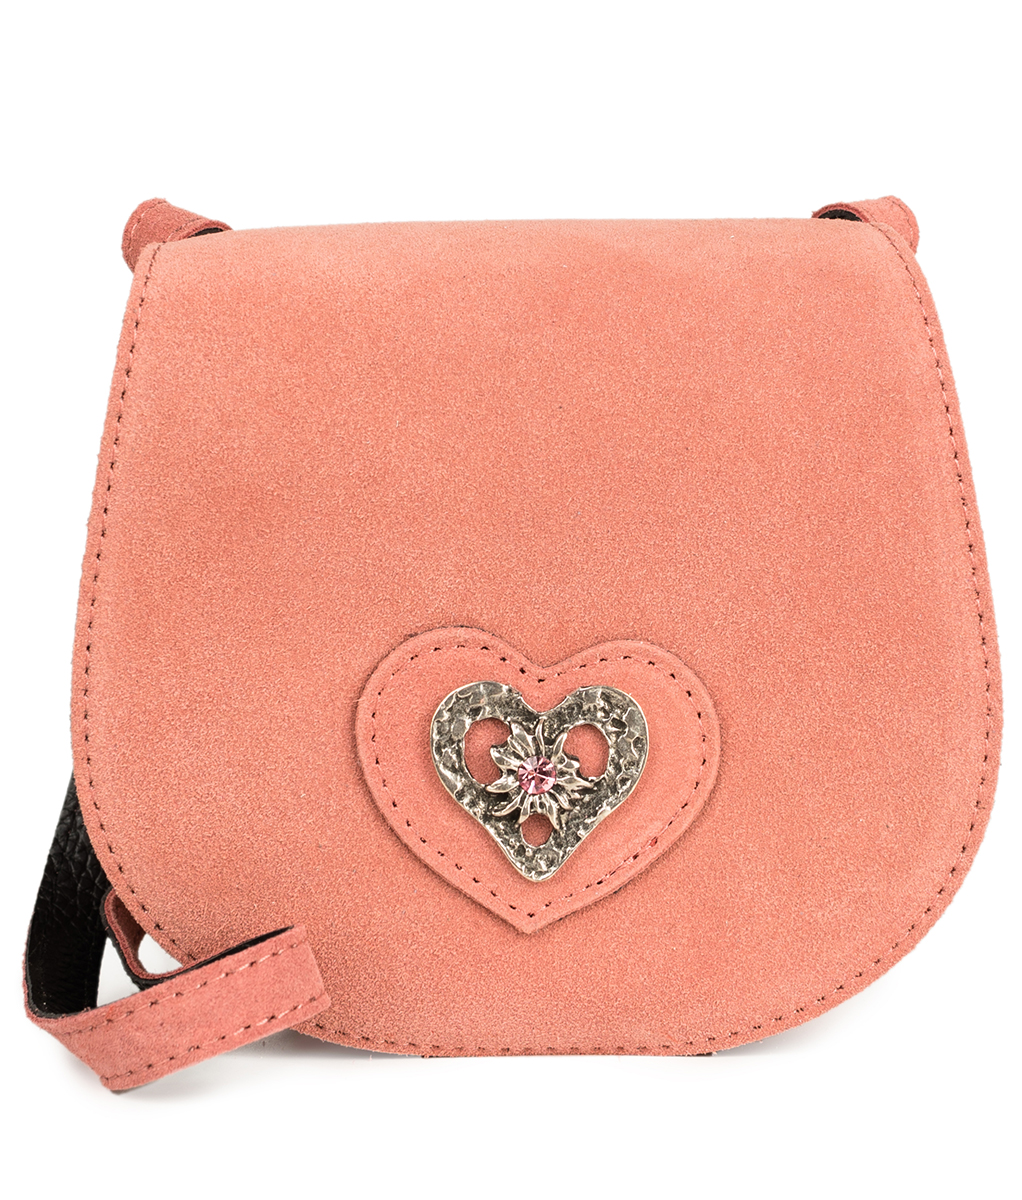 Traditional leather bag with heart TA30340-8489 pink von Schuhmacher